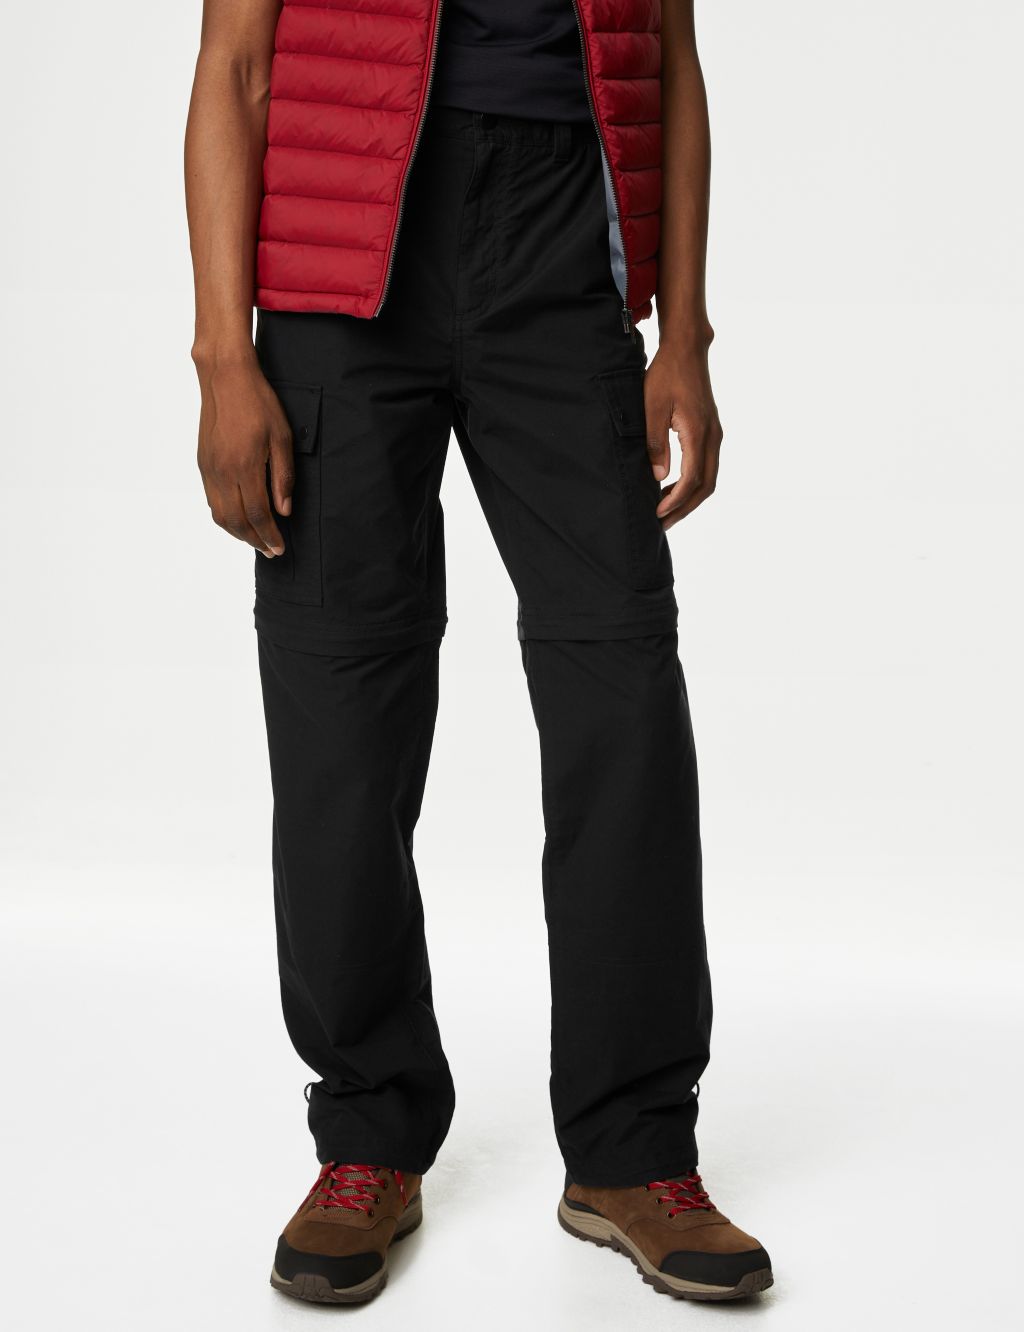 Zip Off Trekking Trousers with Stormwear™ image 1